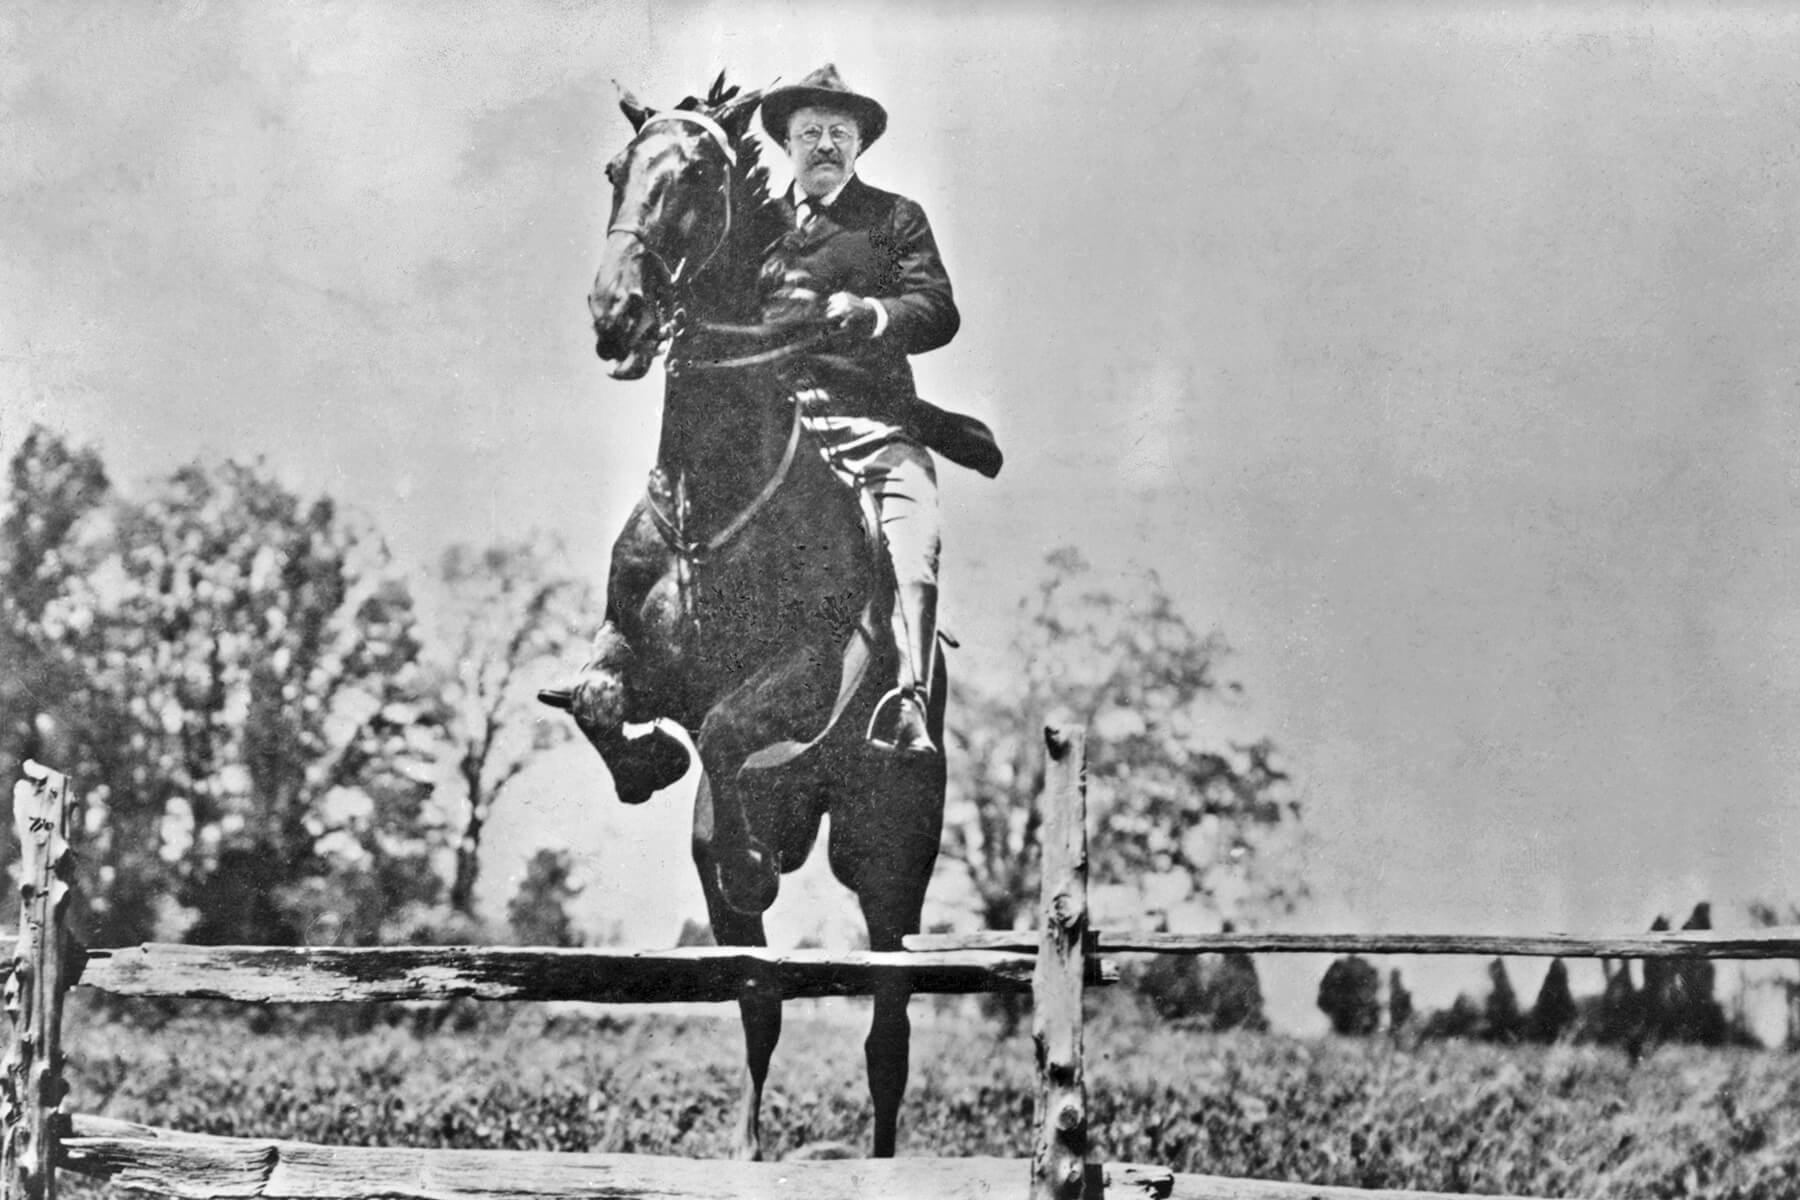 Teddy Roosevelt on a horse